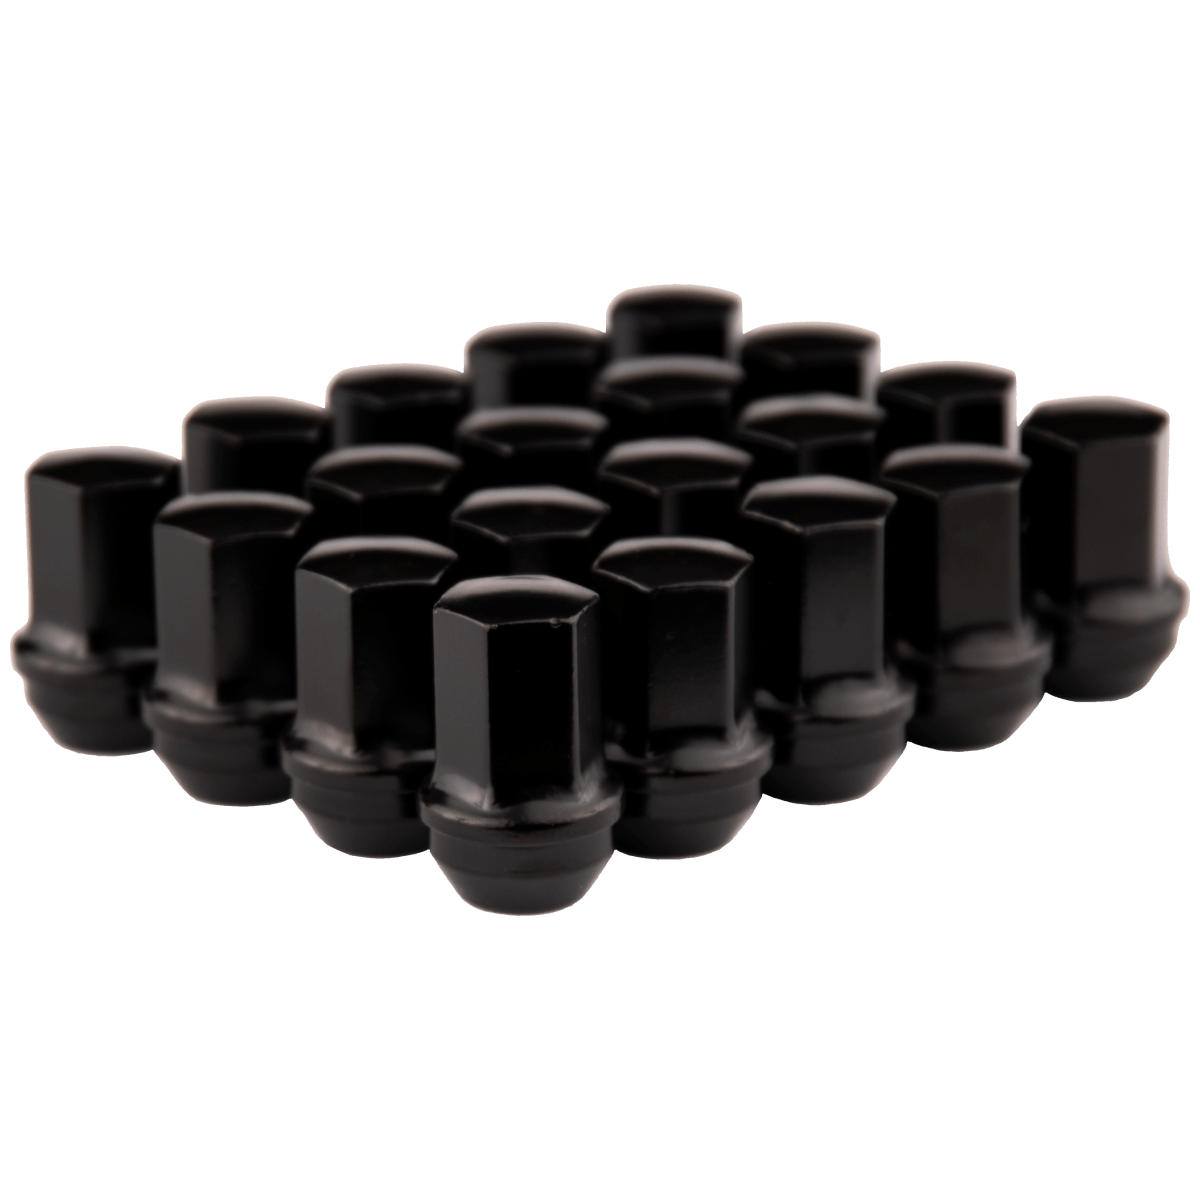 20-Piece ASTRO-NUTS Lug Nut Set for Zink Wheels - Black